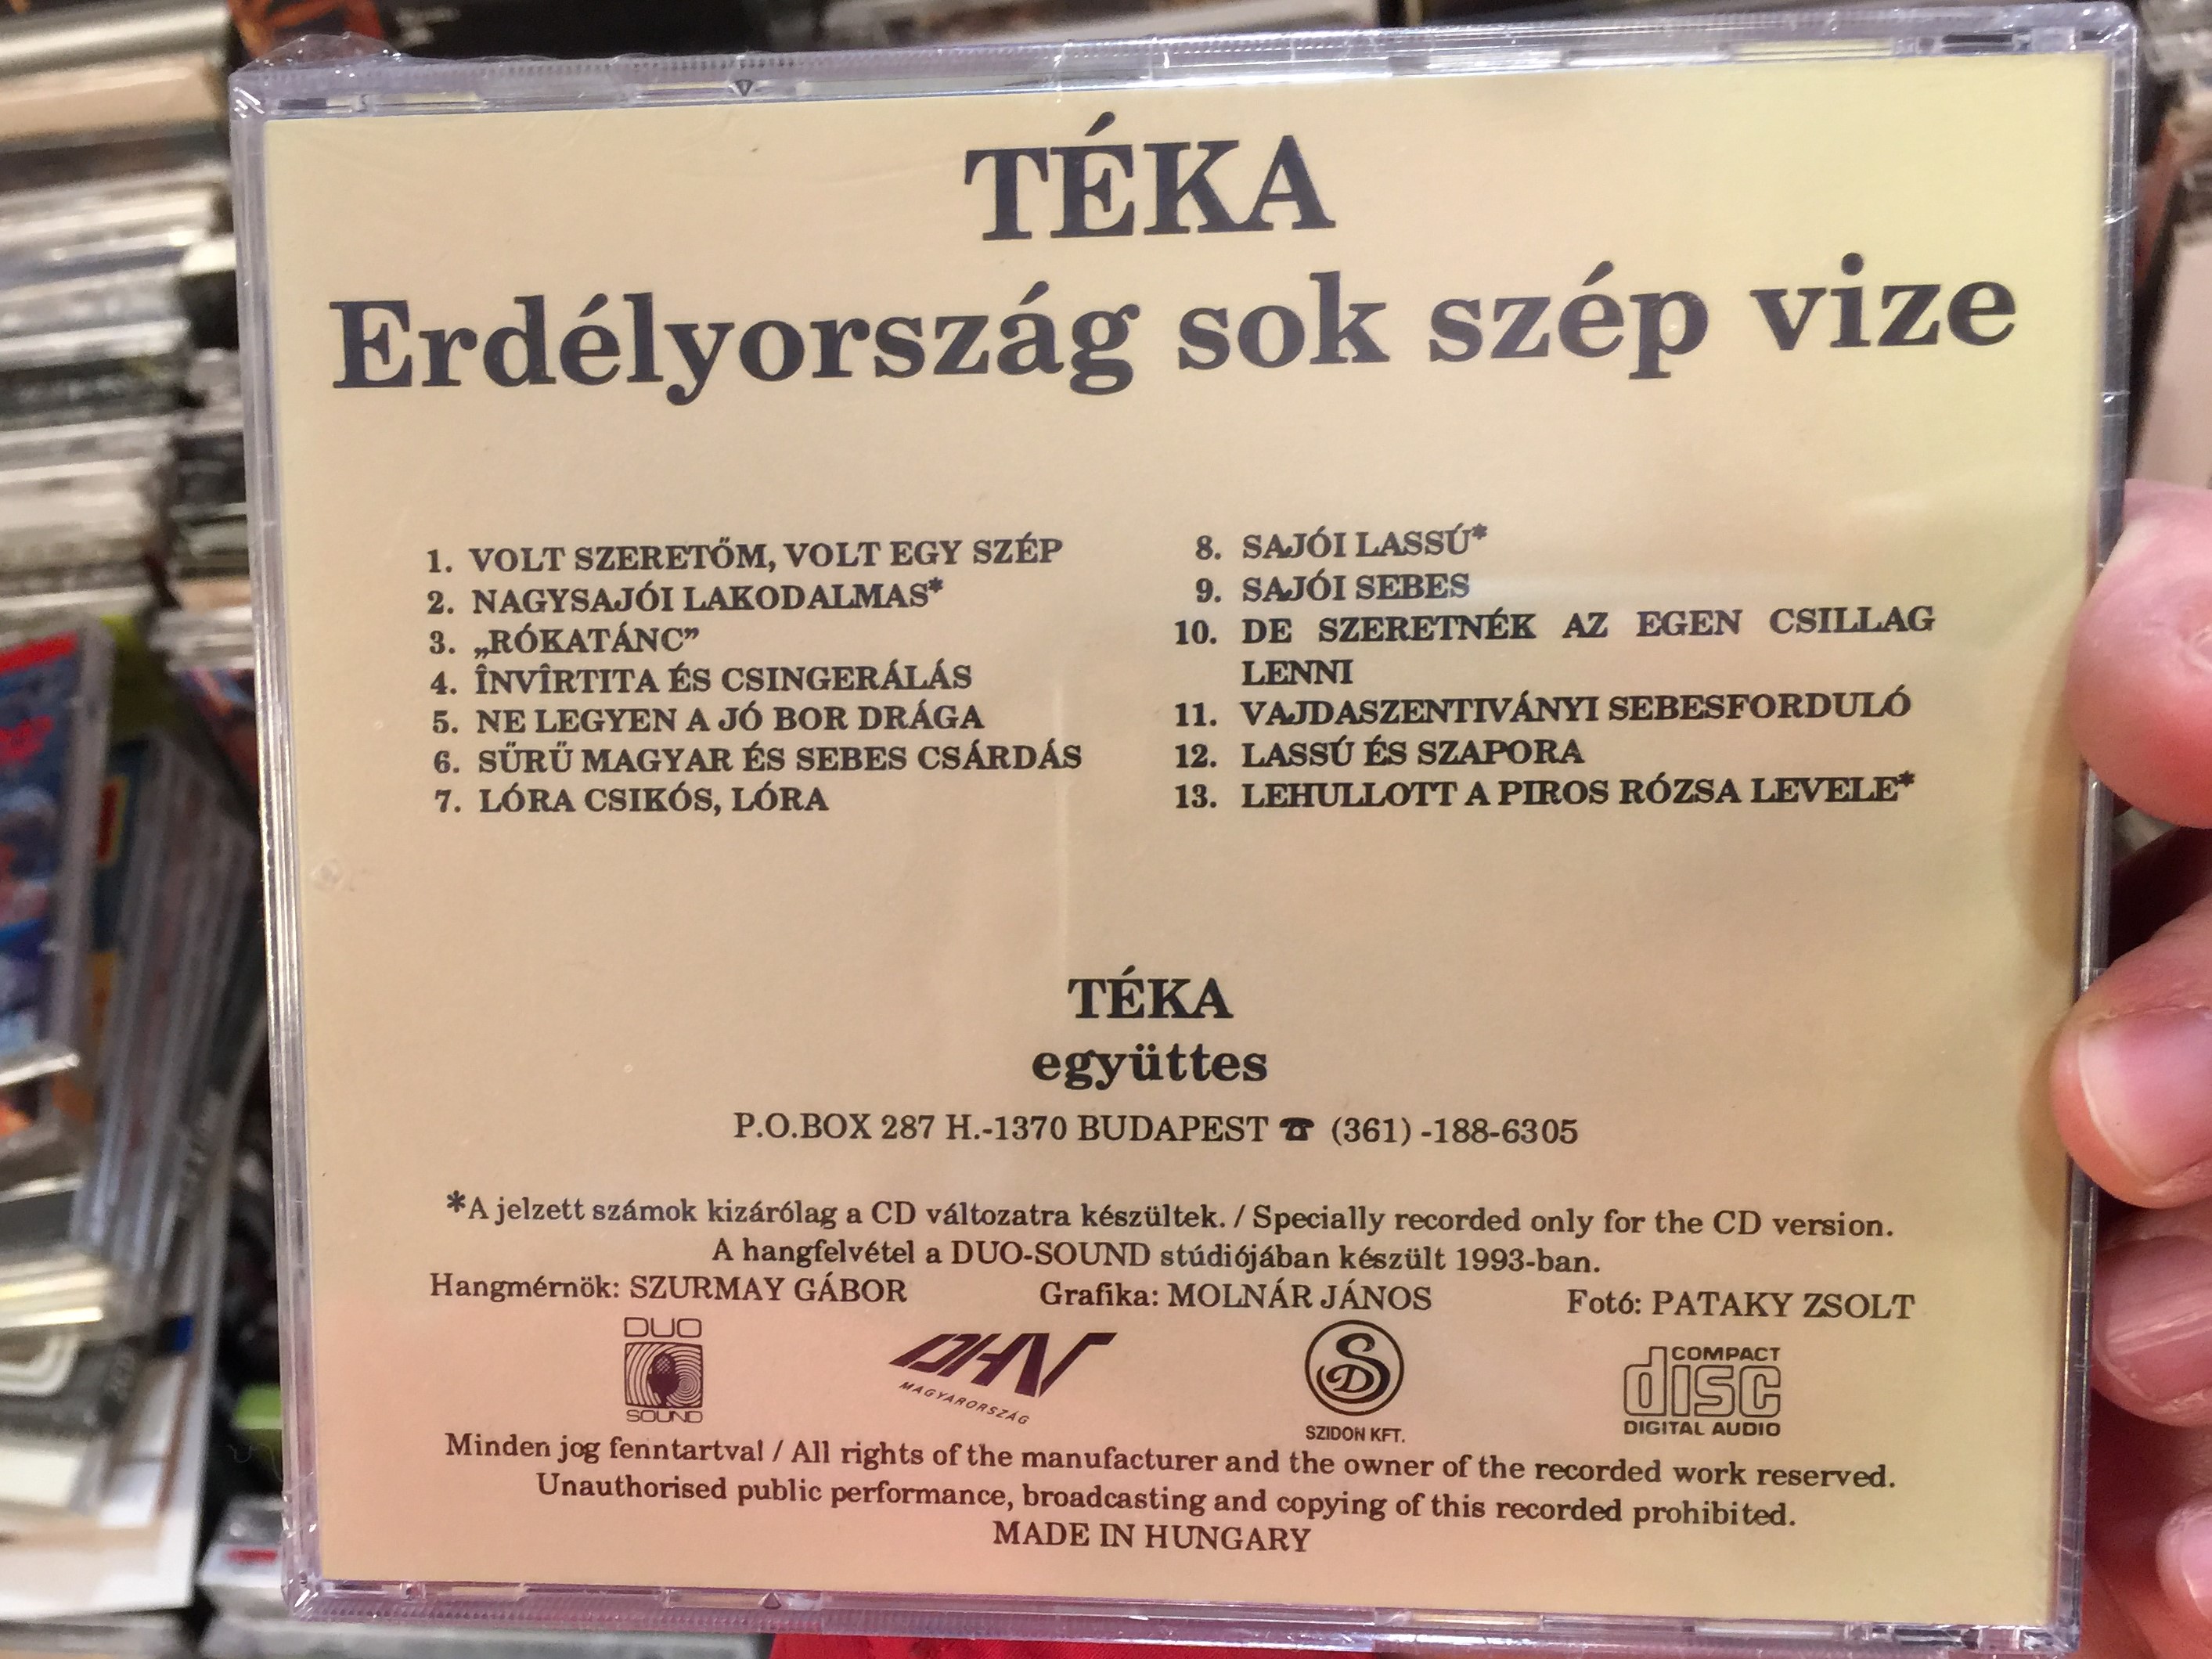 t-ka-erde-lyorsza-g-sok-sze-p-vize-magyar-ne-pzene-hungarian-village-music-harm-nia-bt-audio-cd-2001-tvm-106-2-.jpg